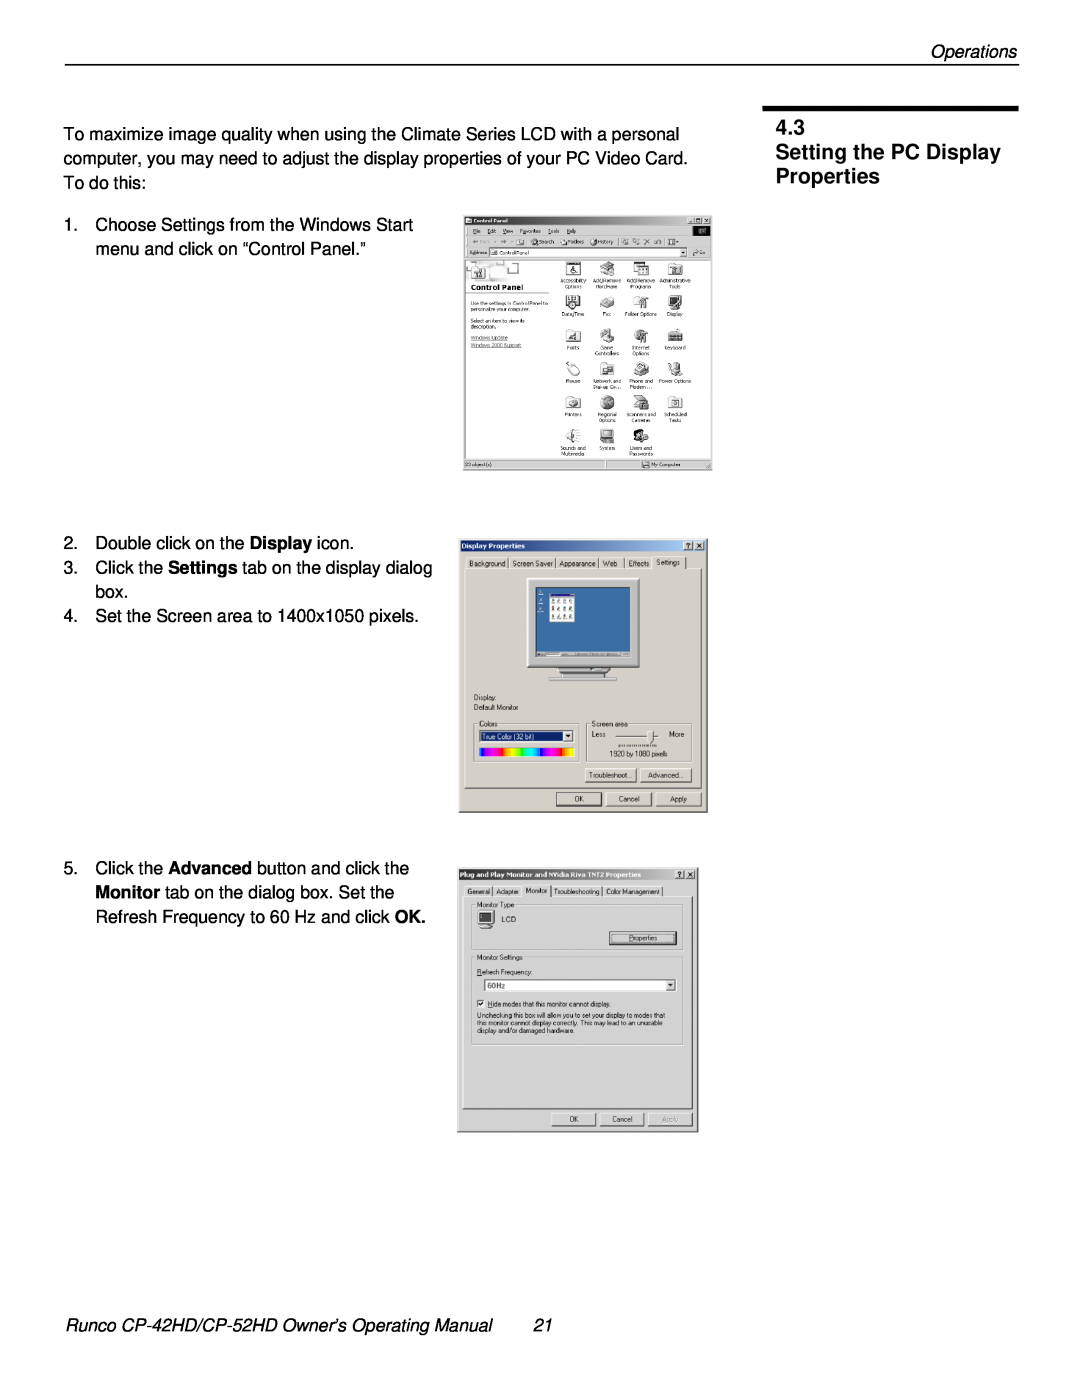 Runco CP-52HD, CP-42HD manual Setting the PC Display Properties 